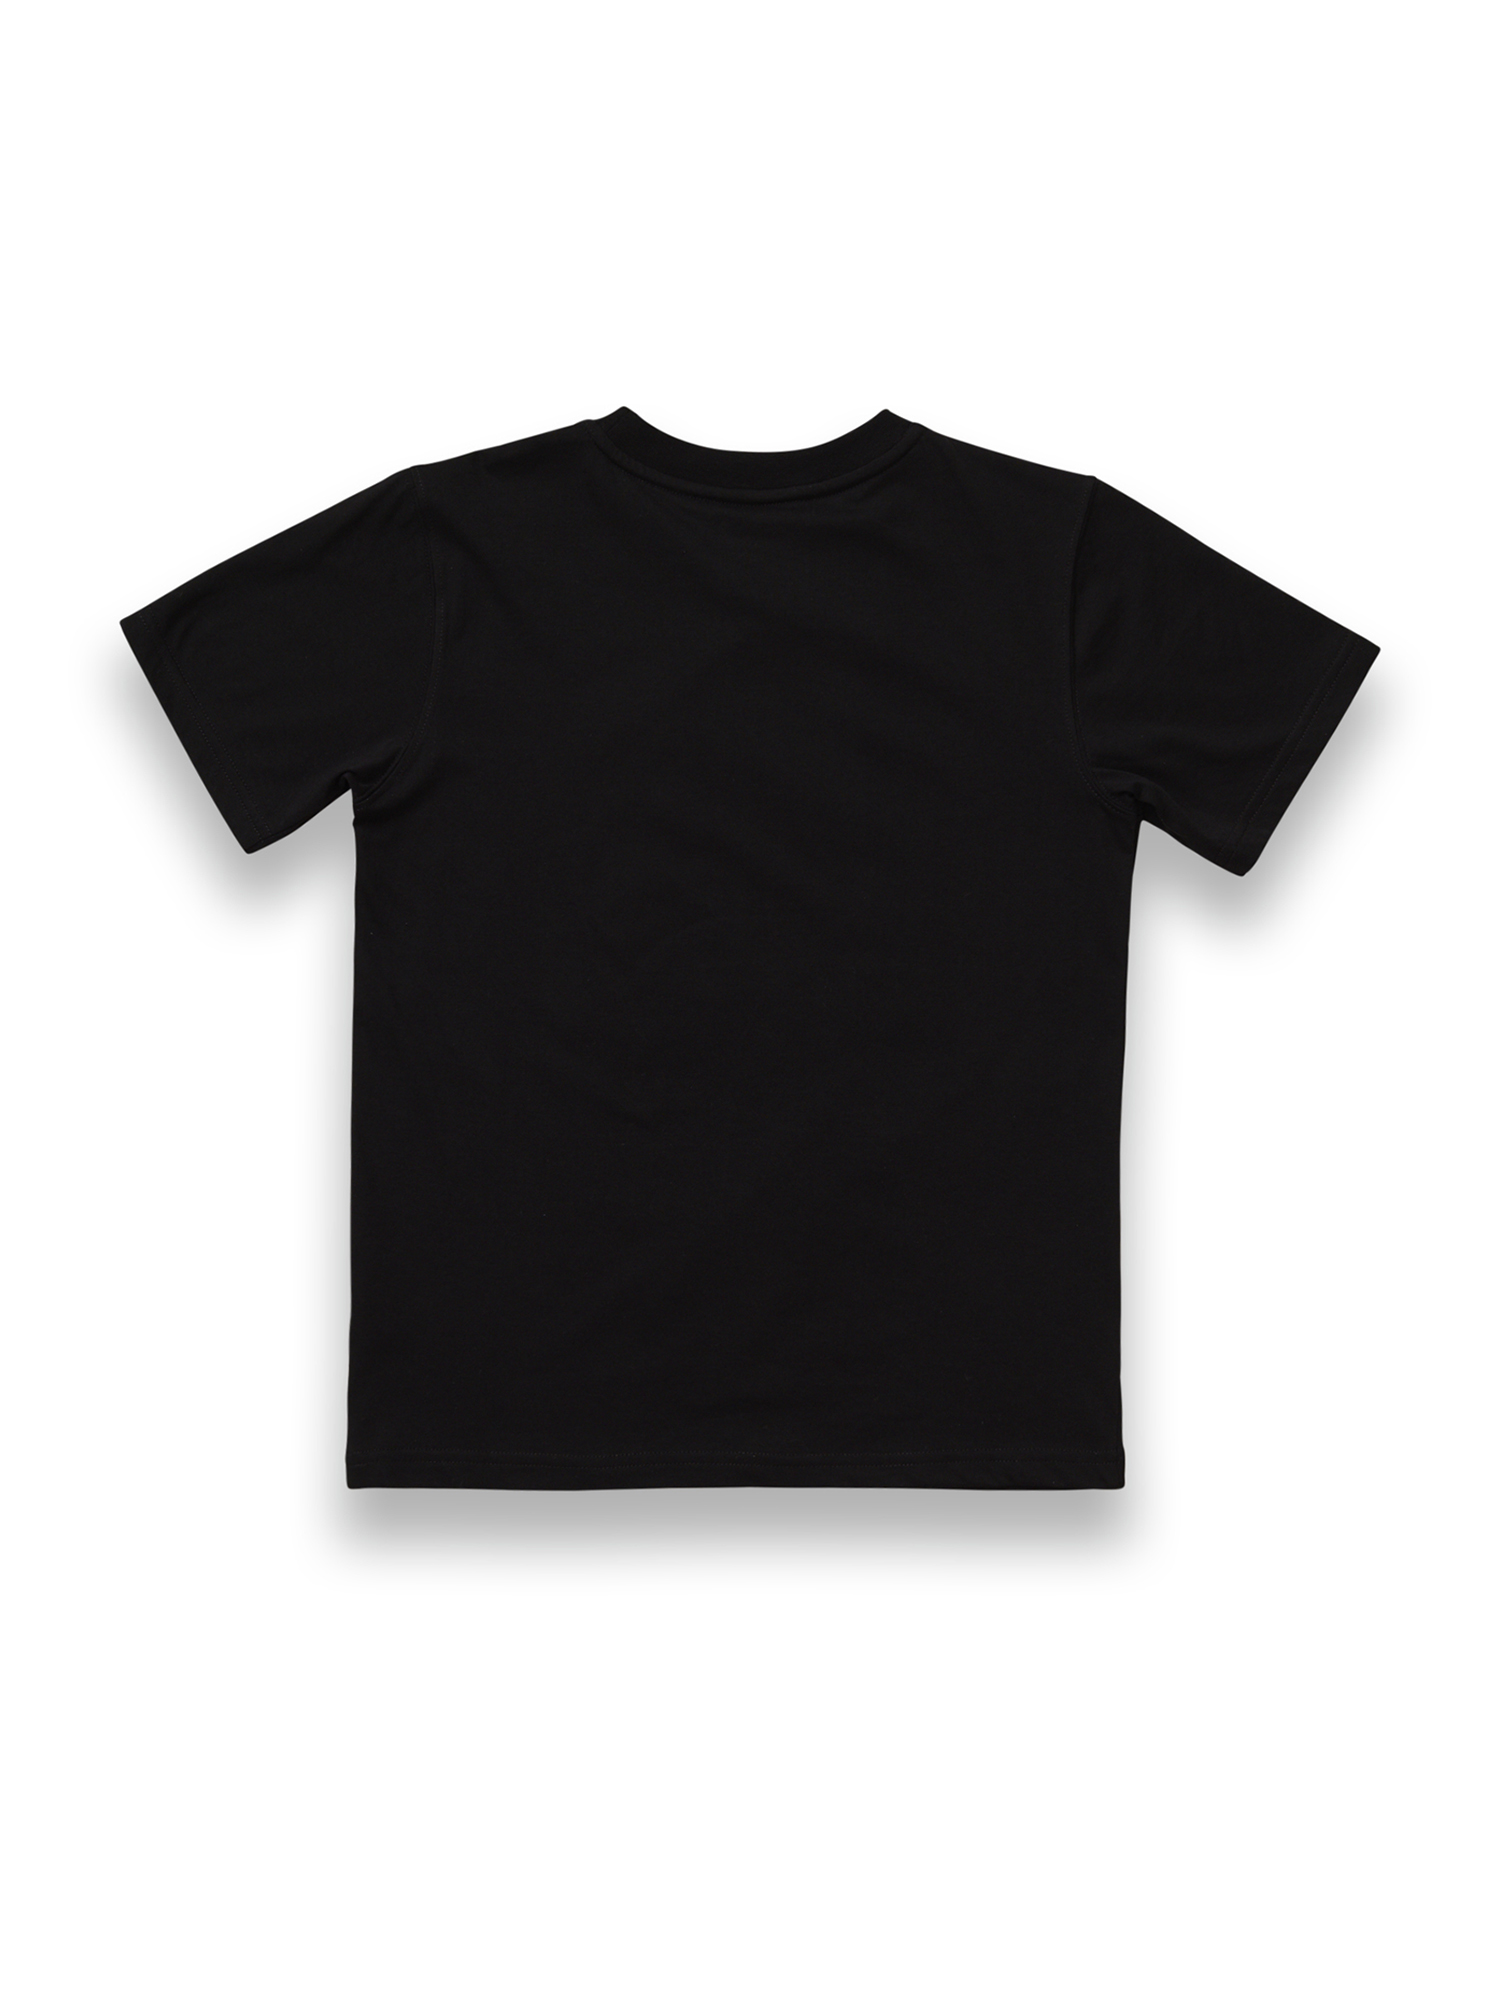 Reebok Boys Short Sleeve Graphic 2-Pack T-Shirts, Size 4-18 - image 5 of 5